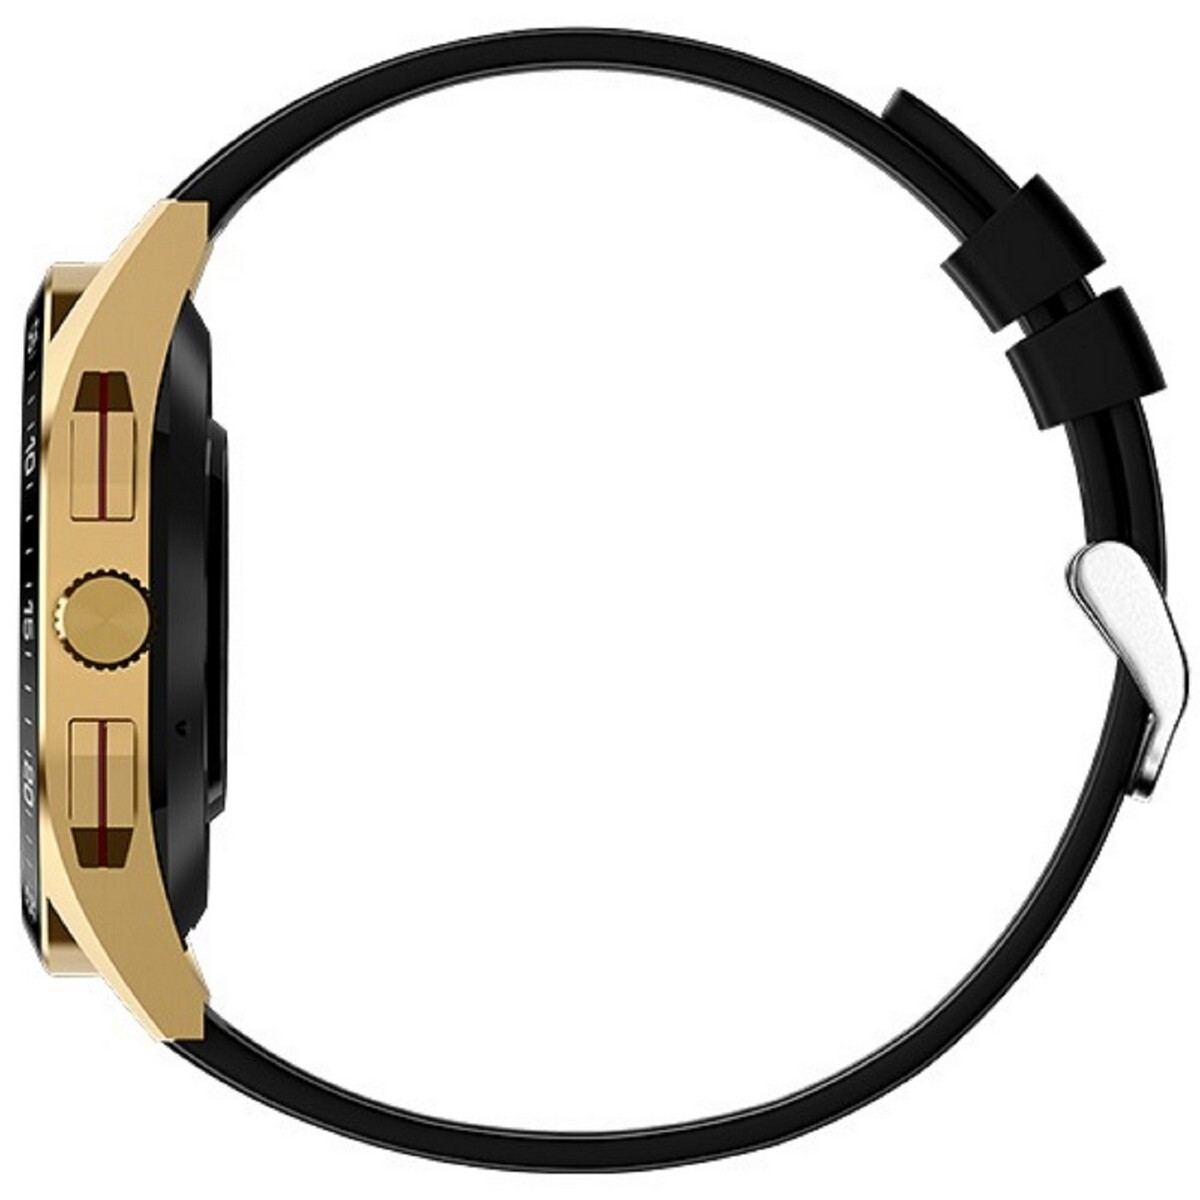 FireBoltt Smart Watch Invicible Plus Gold Black